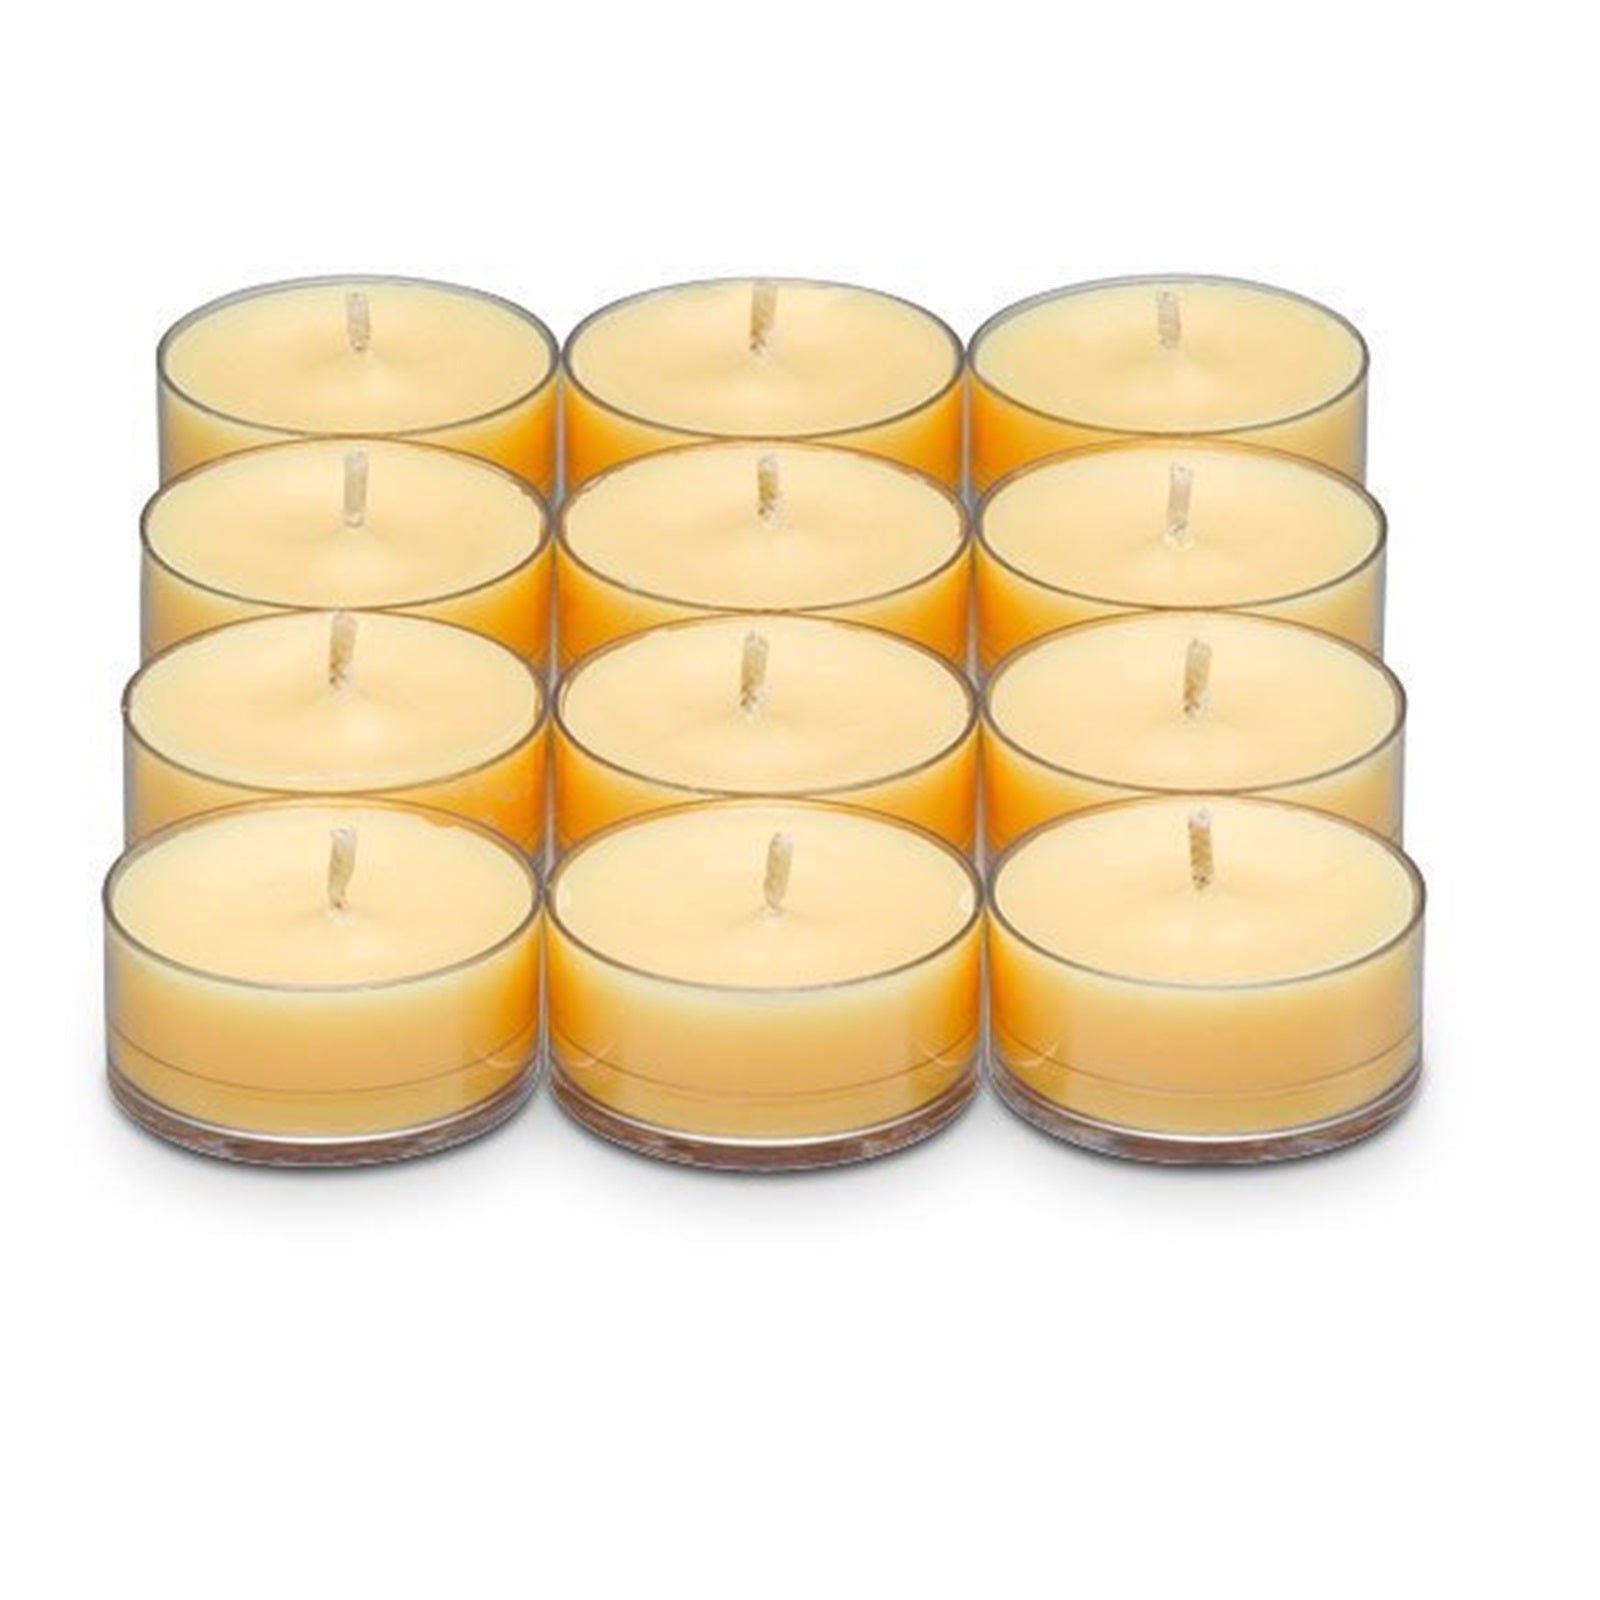 PartyLite Tealight Candles - 1 Box - 1 Dozen Tealights - 12 CITRUS PEEL & SAGE WAX